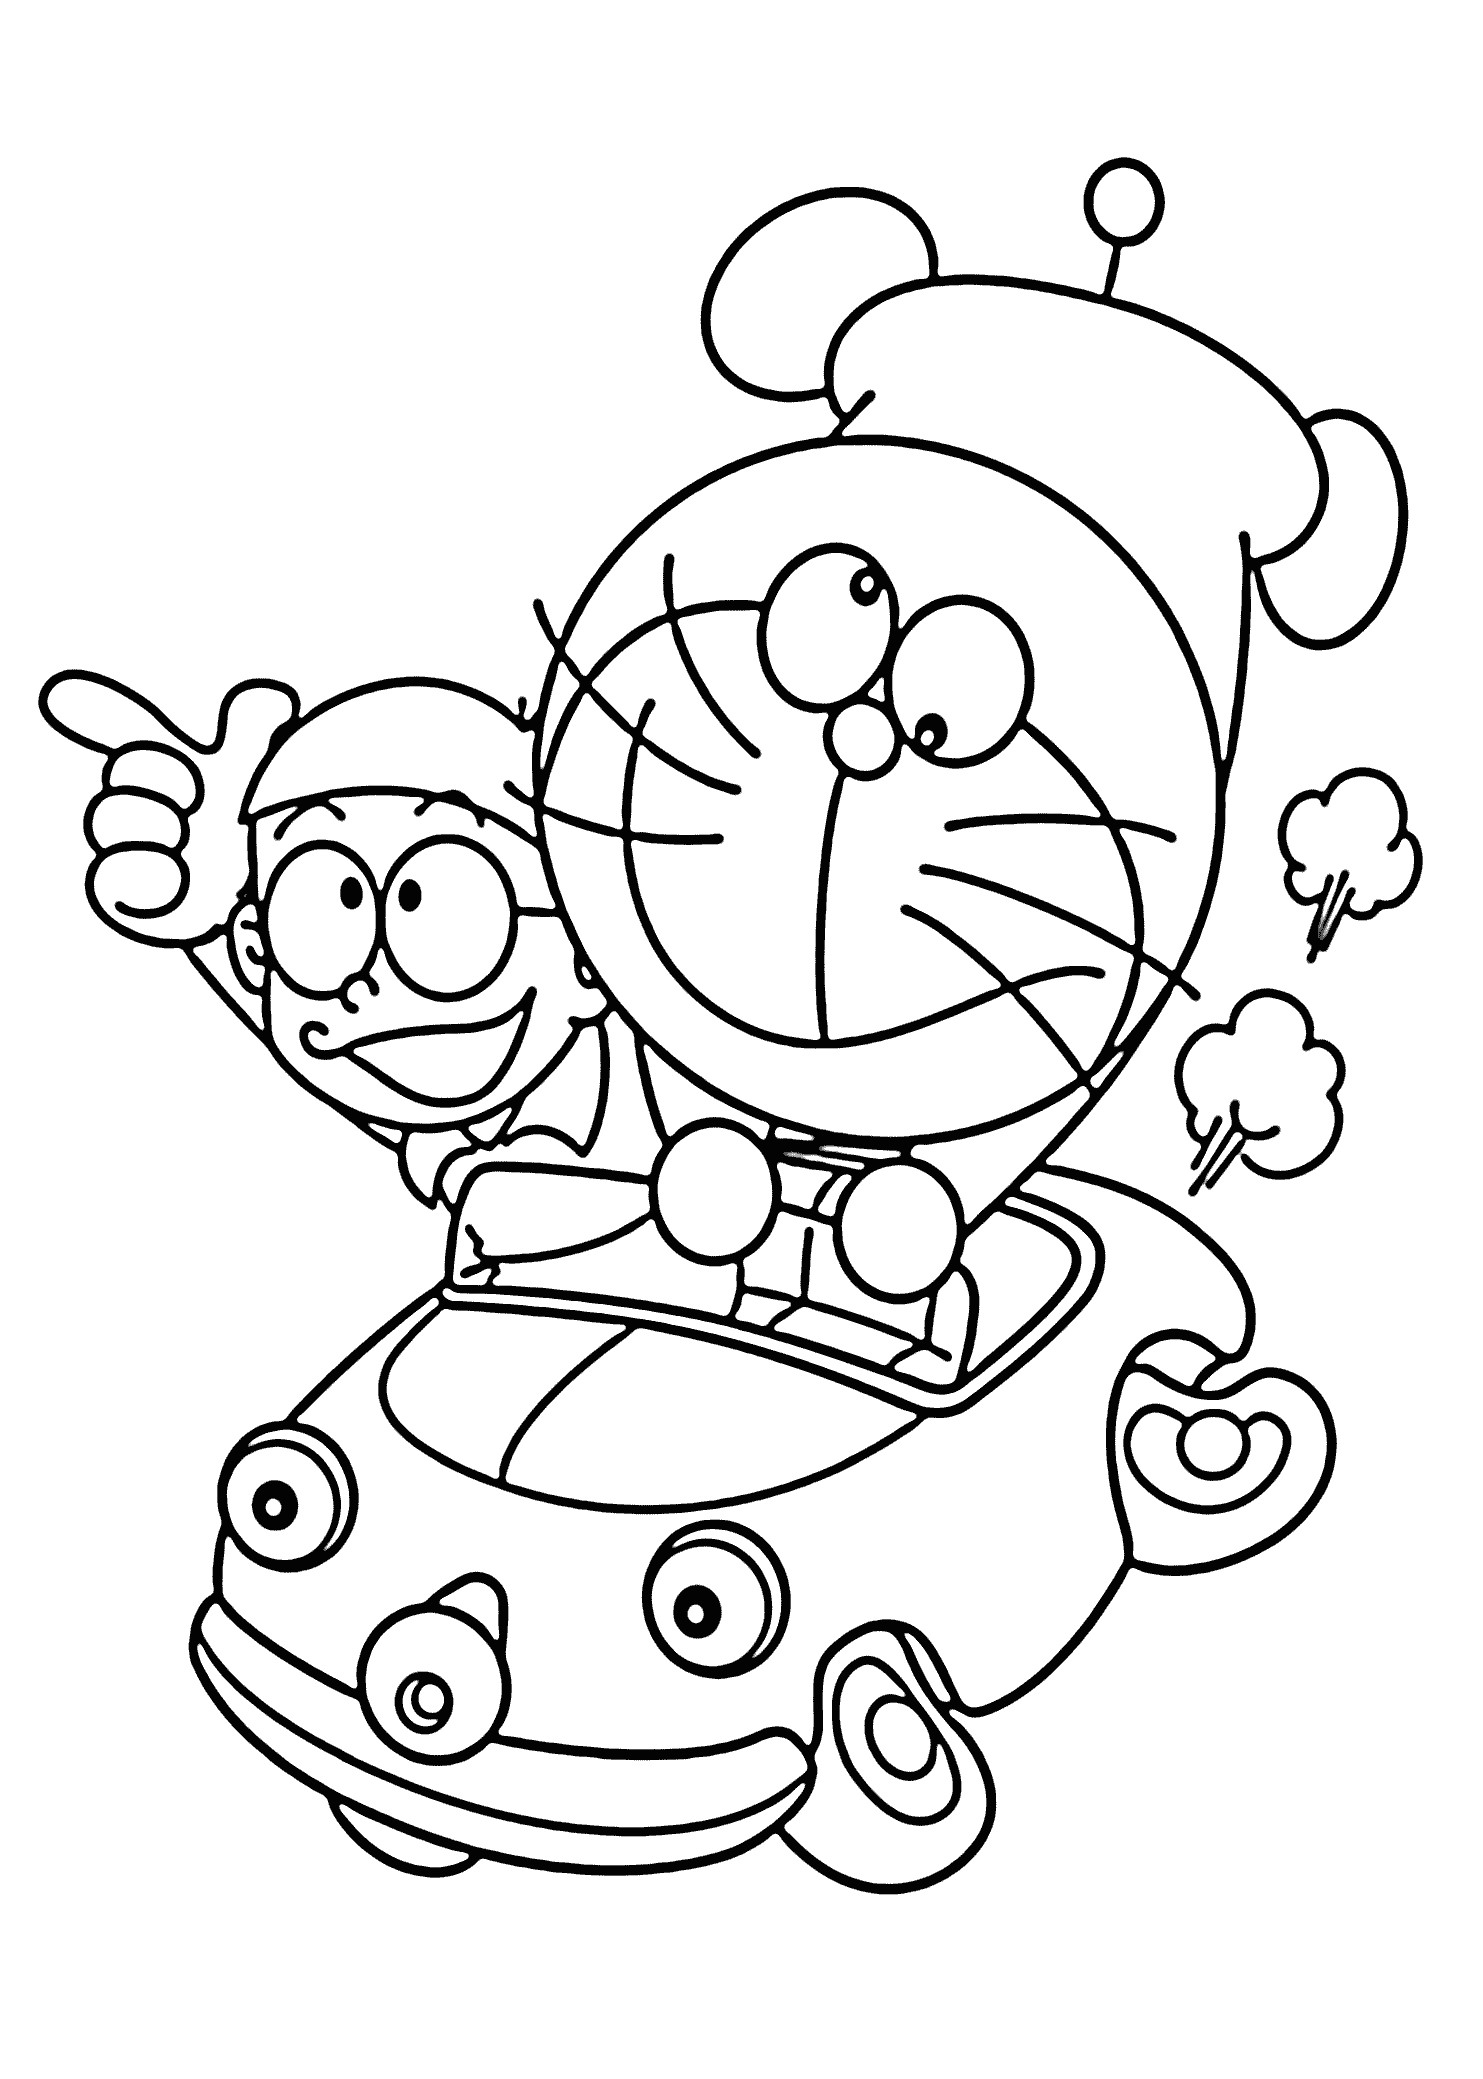 Doraemon Cartoon Drawing Doraemon In Car Coloring Pages for Kids Printable Free Doraemon